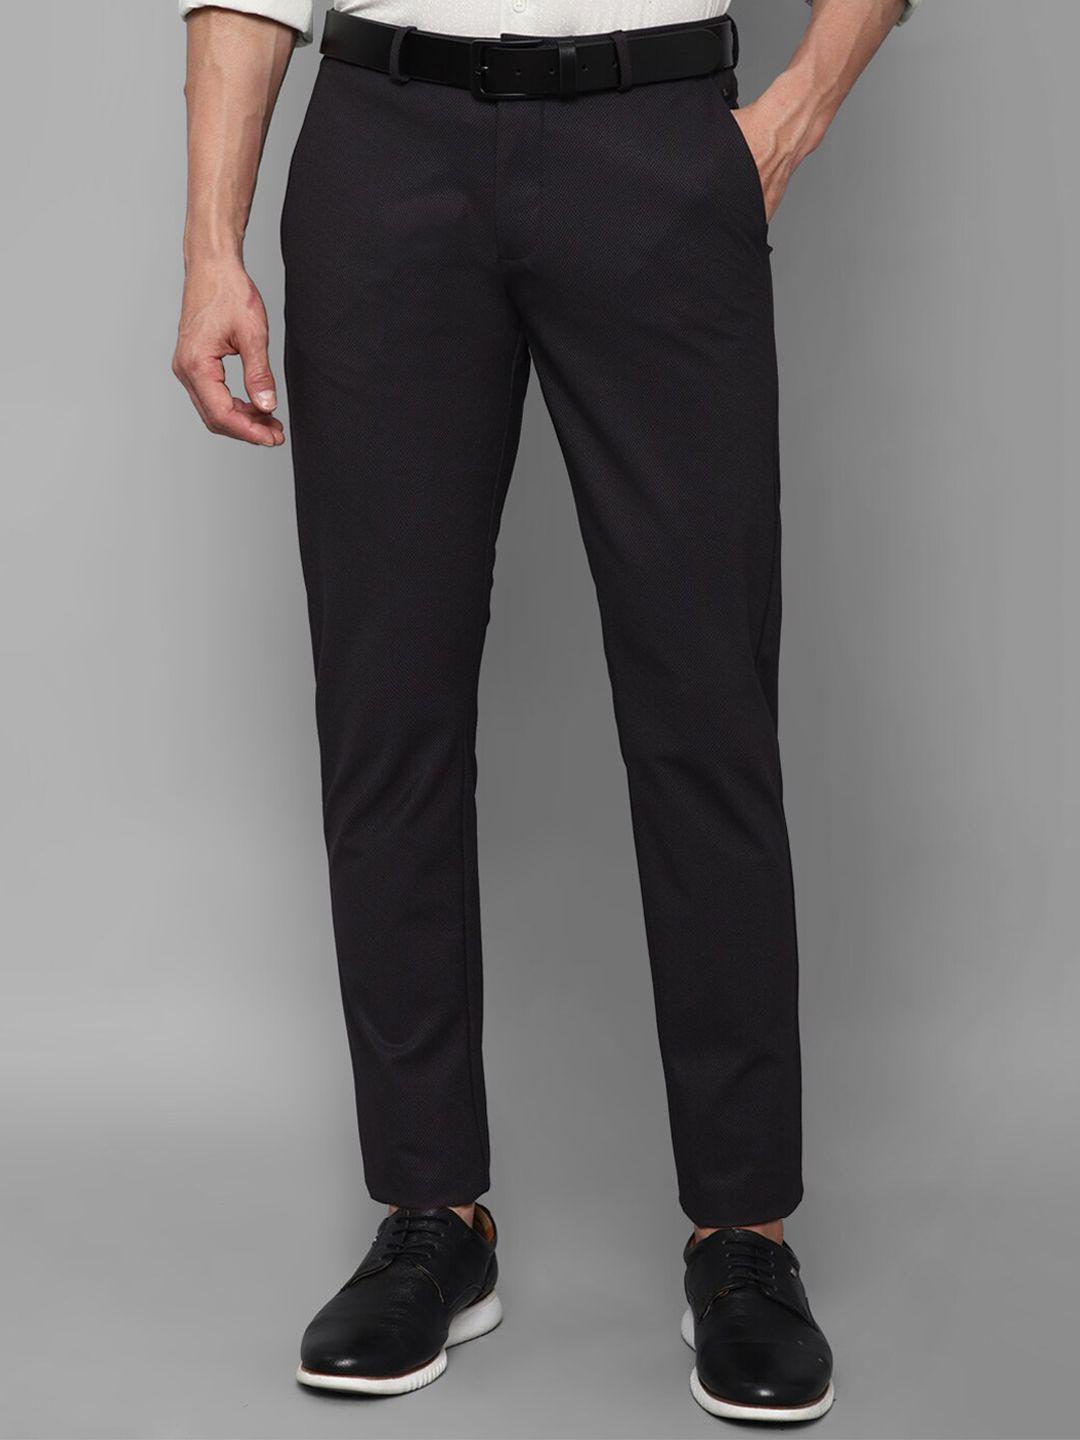 allen-solly-men-black-slim-fit-trousers